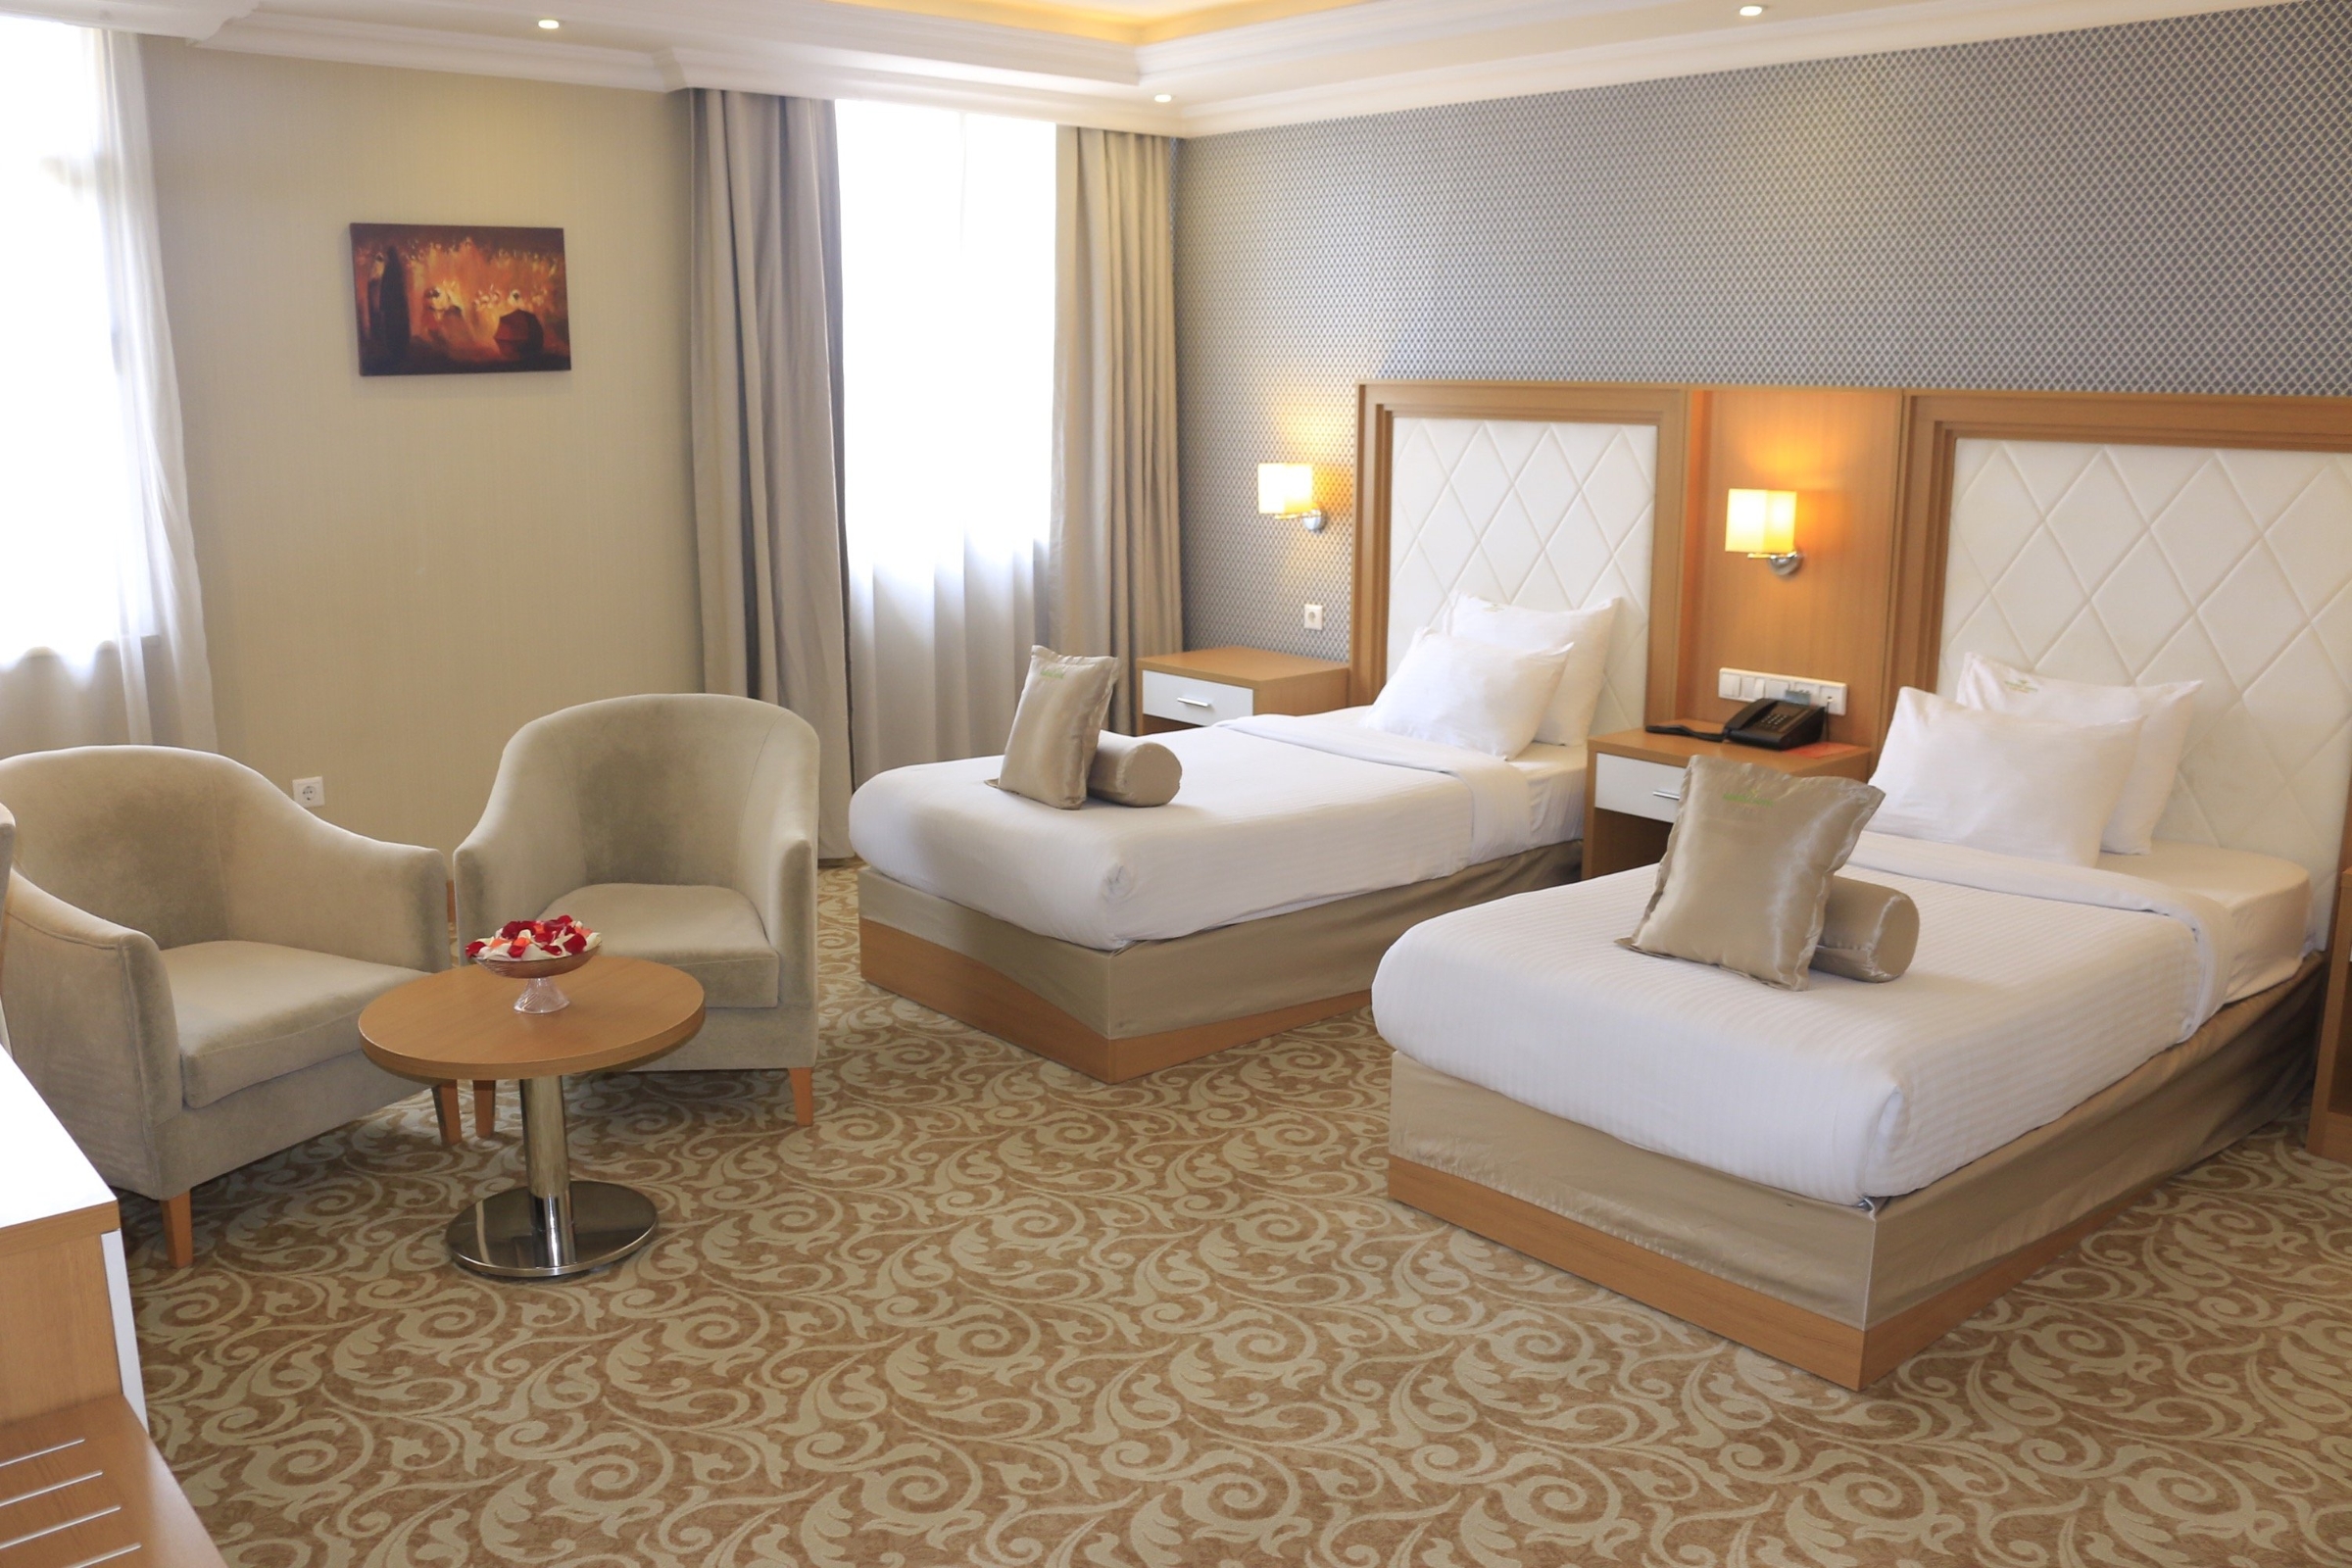 Hotel Momona - 4 HRS star hotel in Addis Ababa